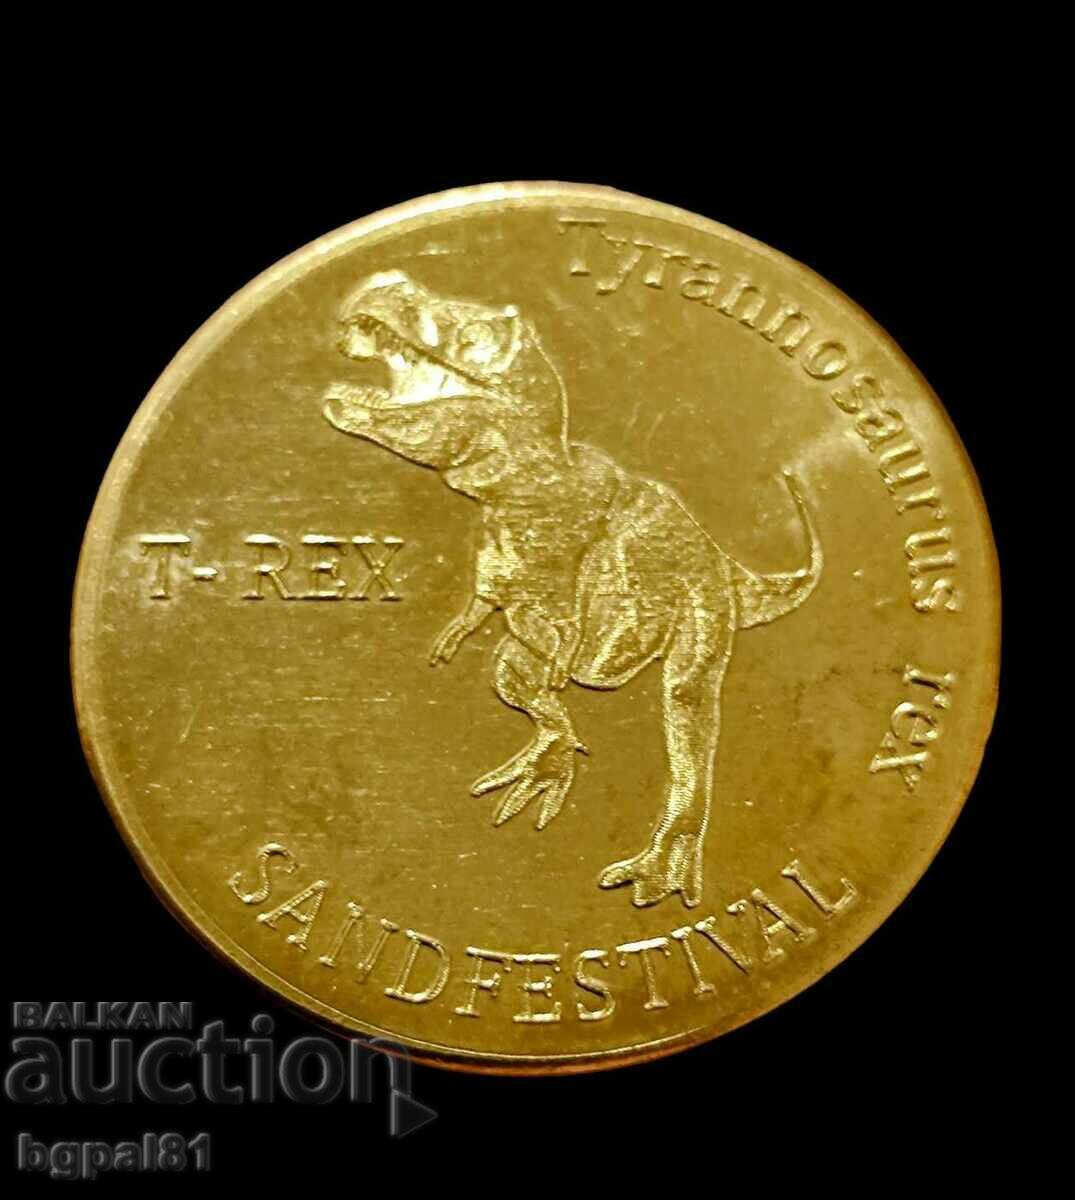 Tyrannosaurus Rex - "Bulgarian legacy" medal issue